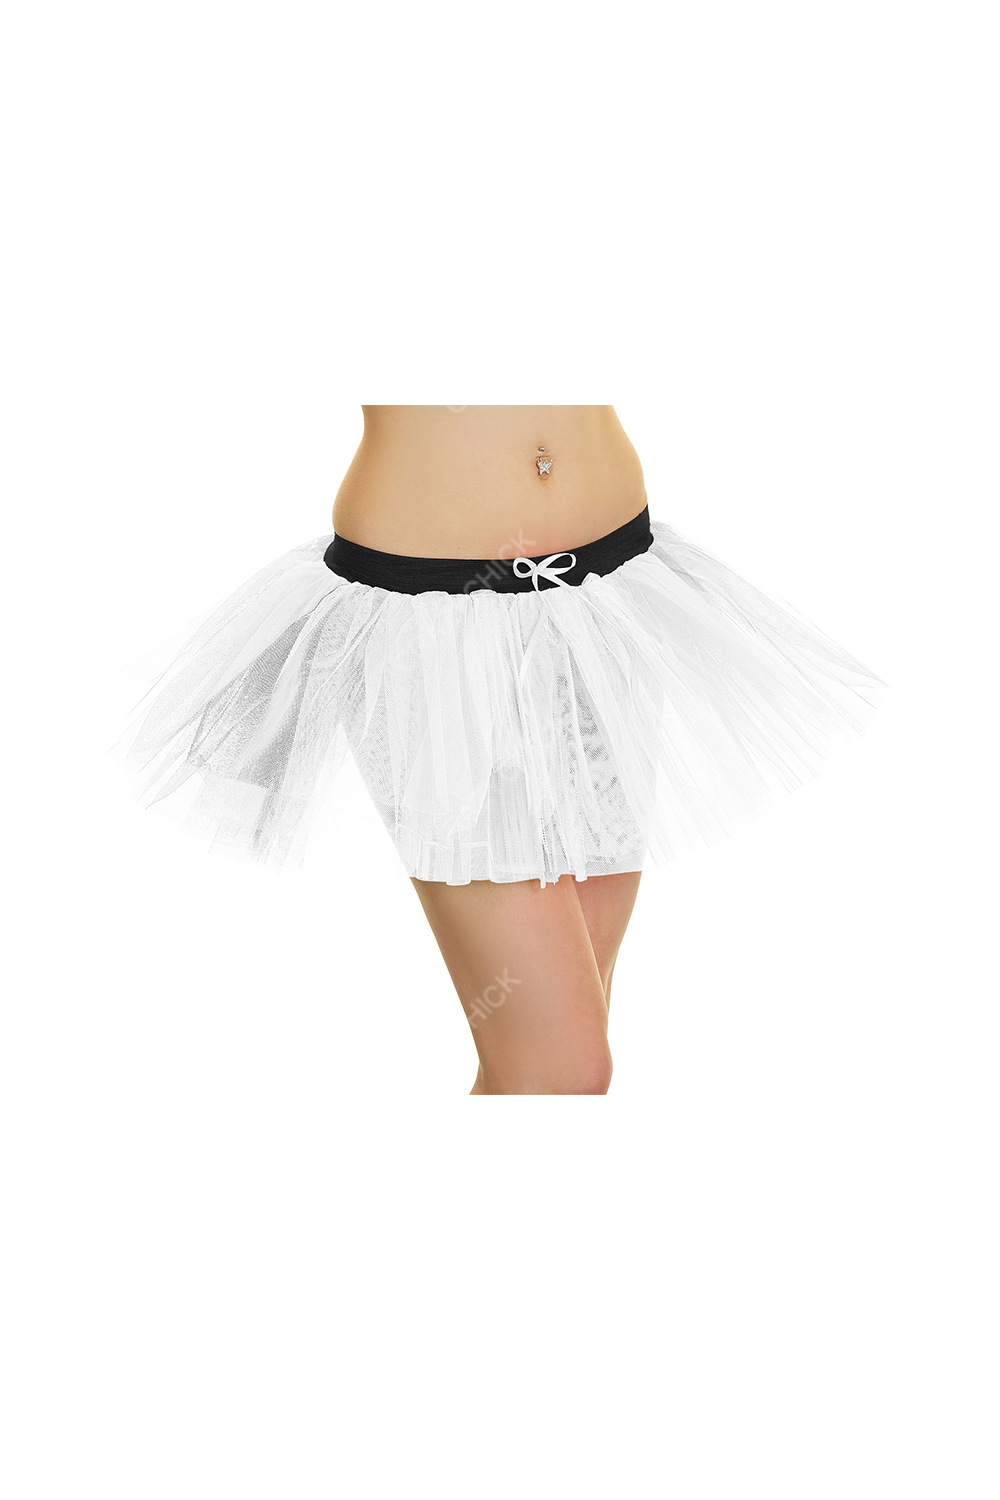 Crazy Chick Adult 3 Layers White Angel Tutu Skirt